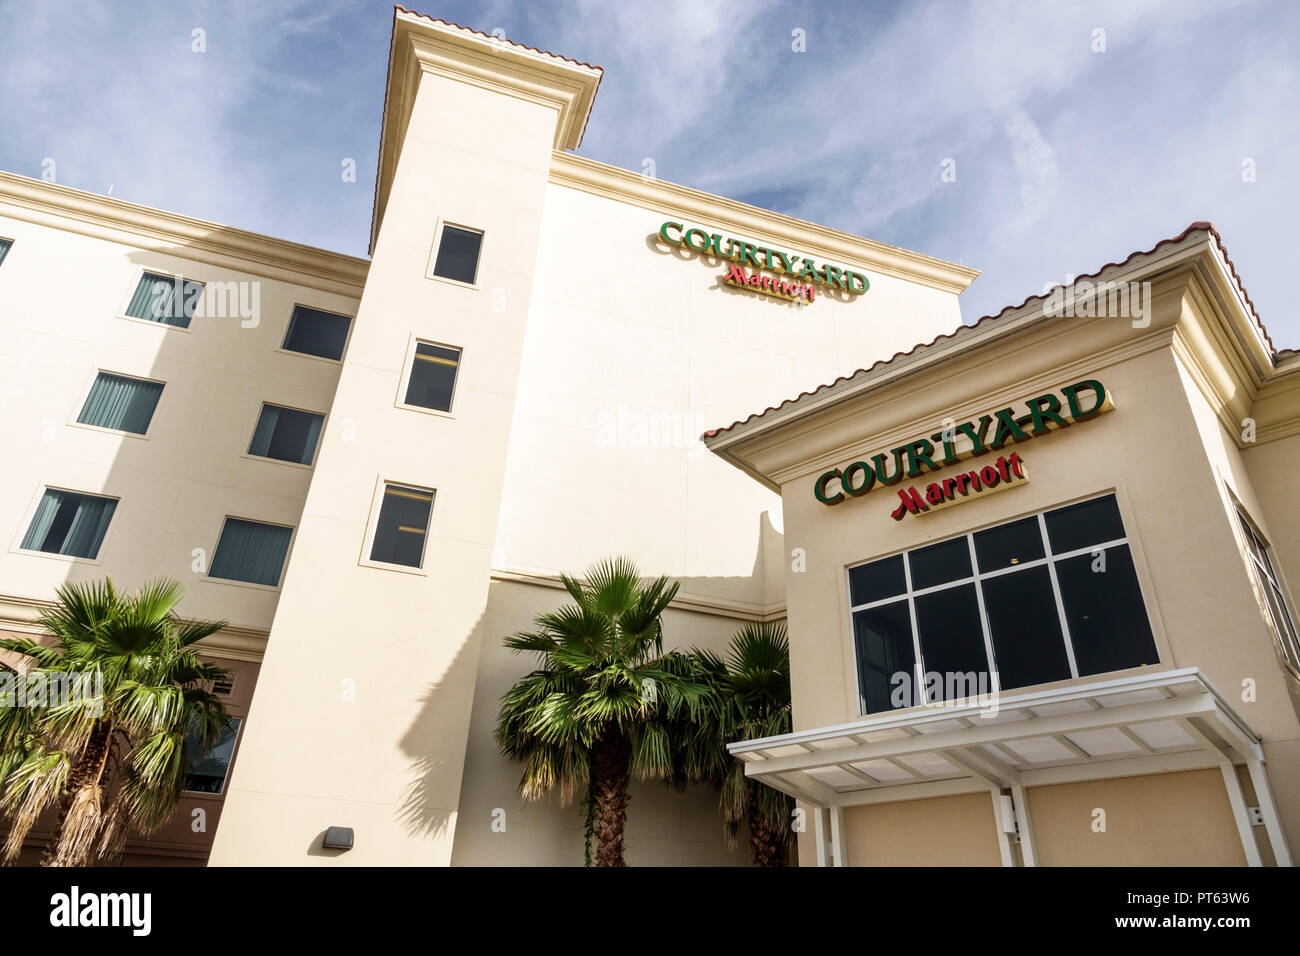 St. Saint Petersburg Florida,Madeira Beach,Courtyard Marriott,hotel,front exterior,FL180731155 Stock Photo